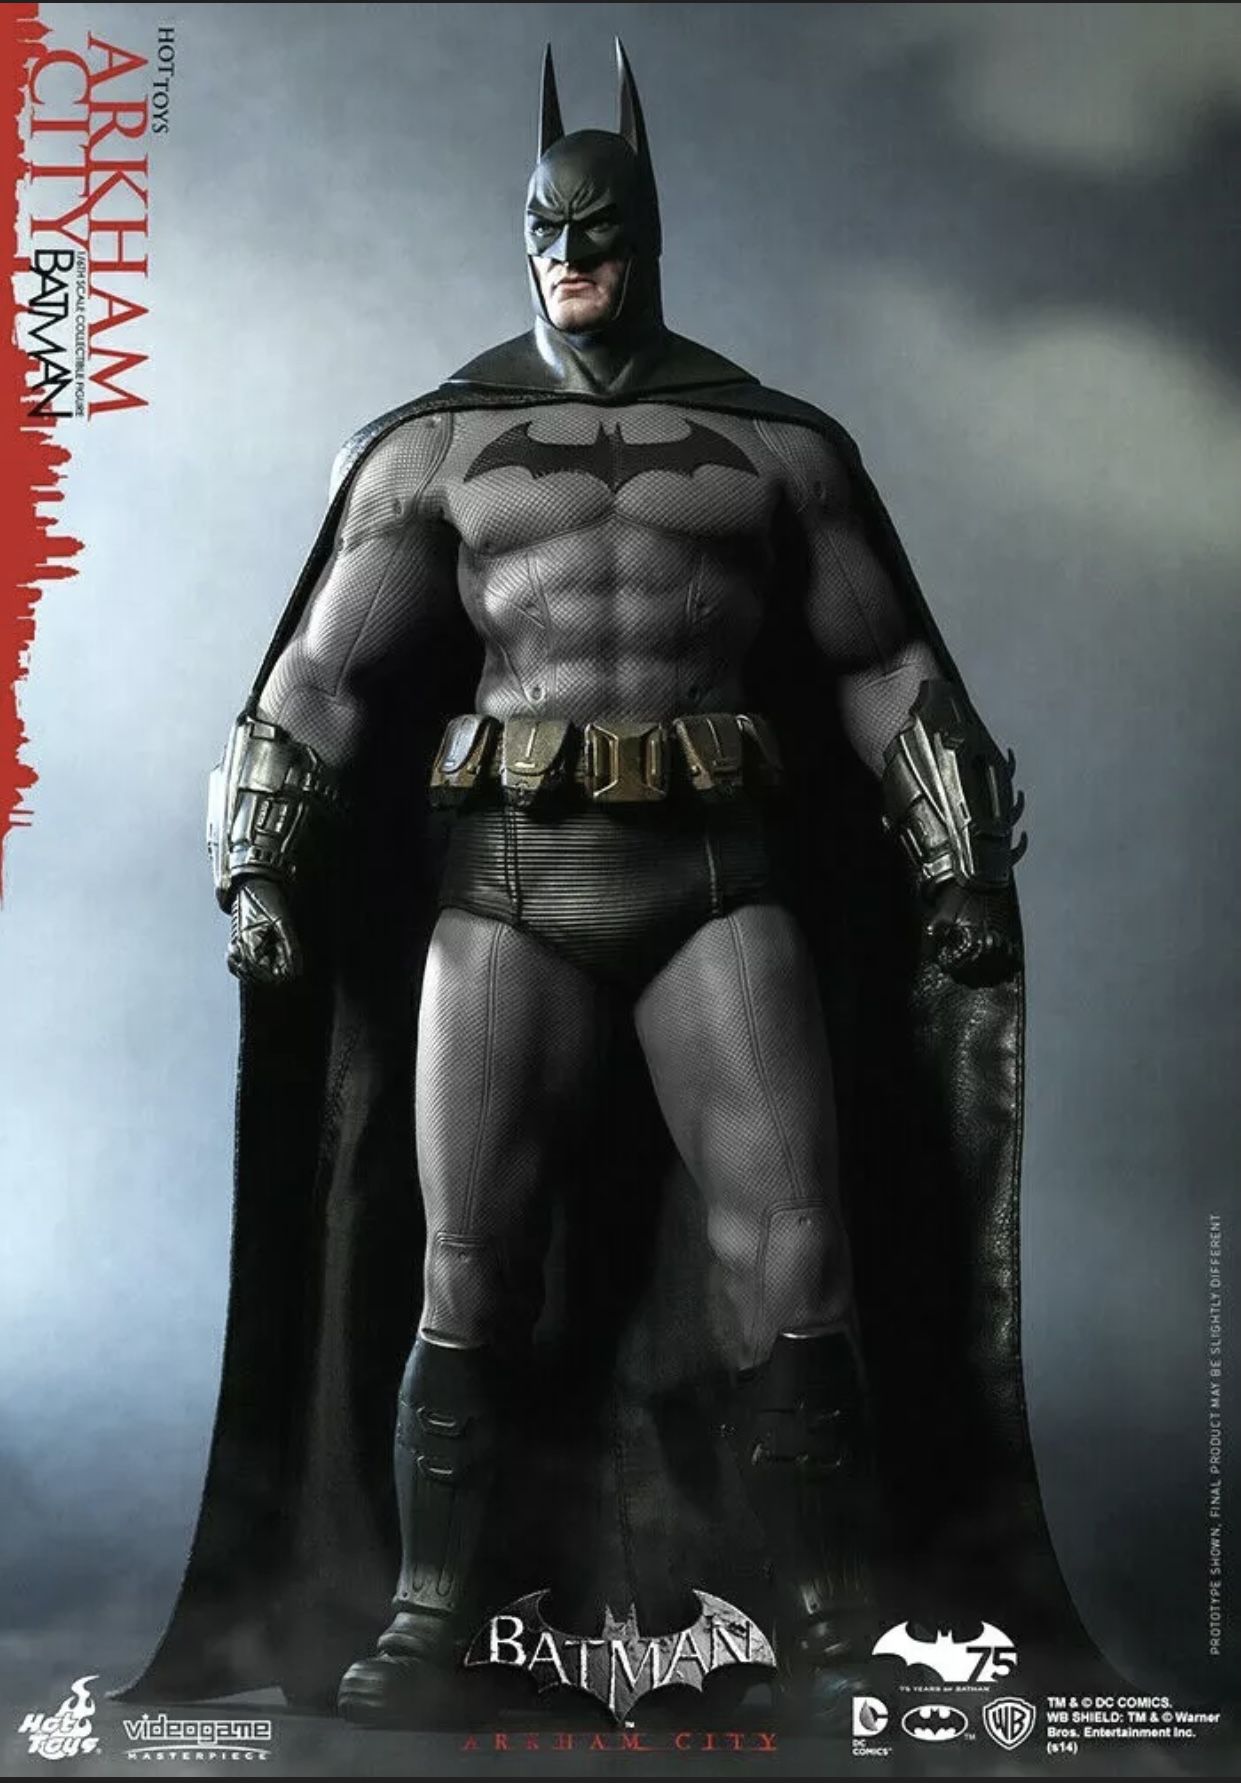 Batman Arkham City | Hot Toys VGM 18 Batman 12 inch Action figure | New